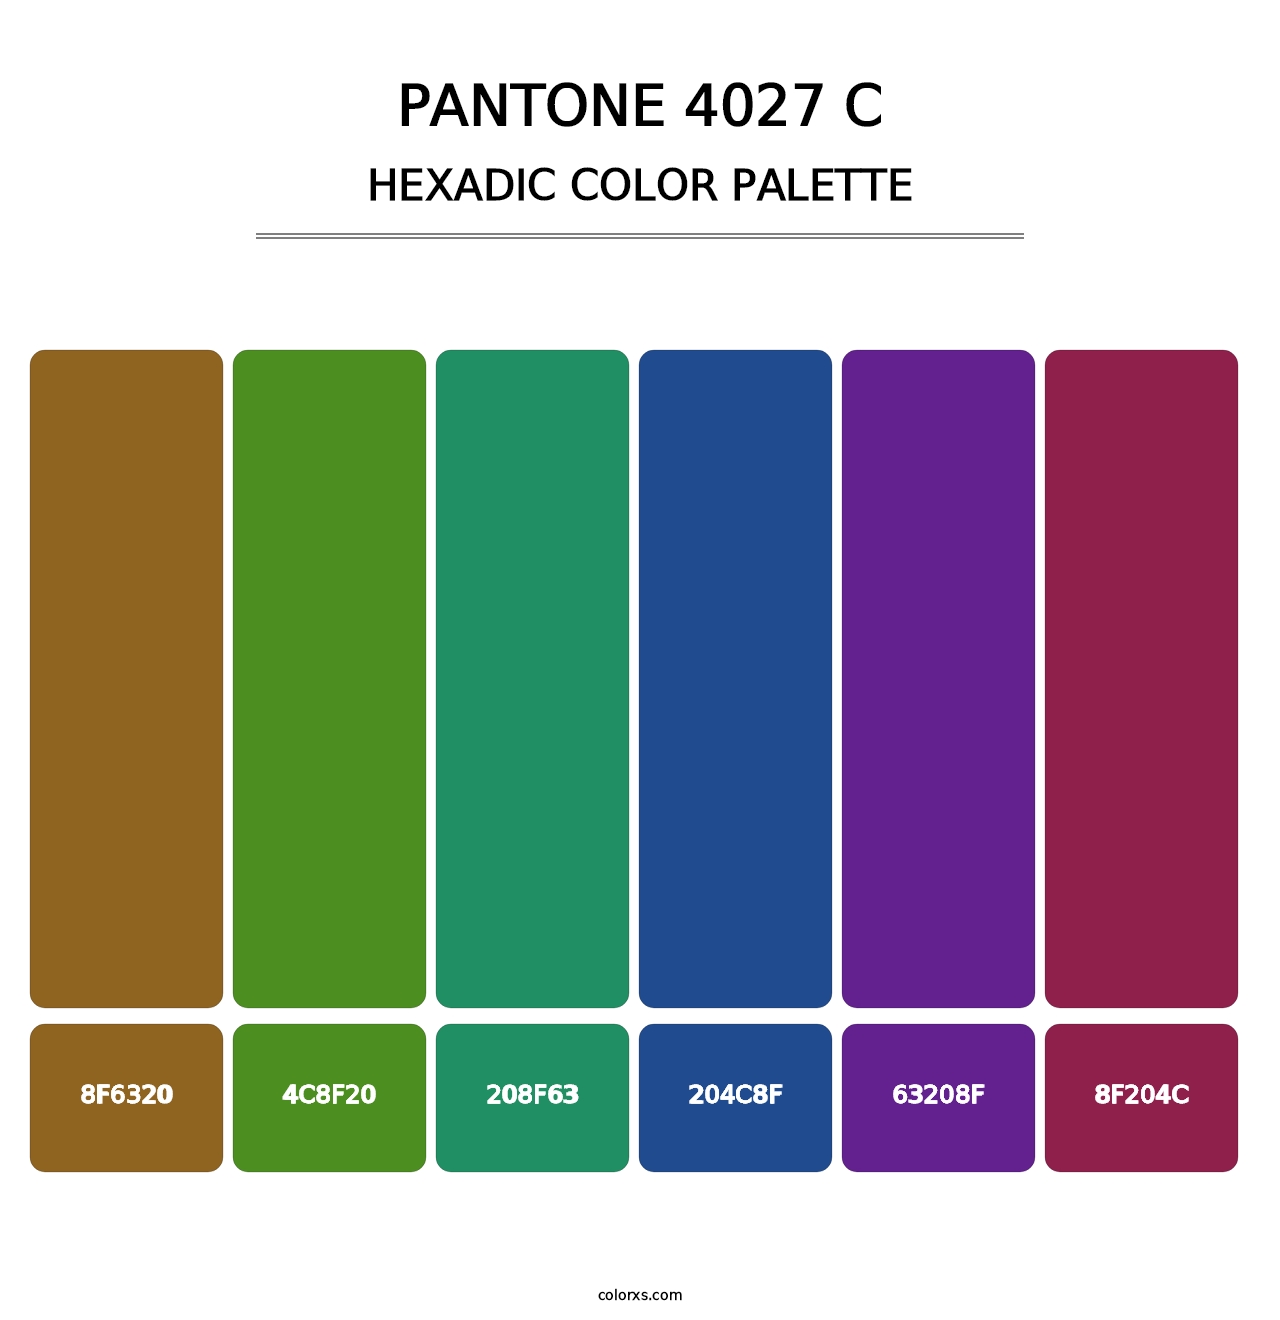 PANTONE 4027 C - Hexadic Color Palette